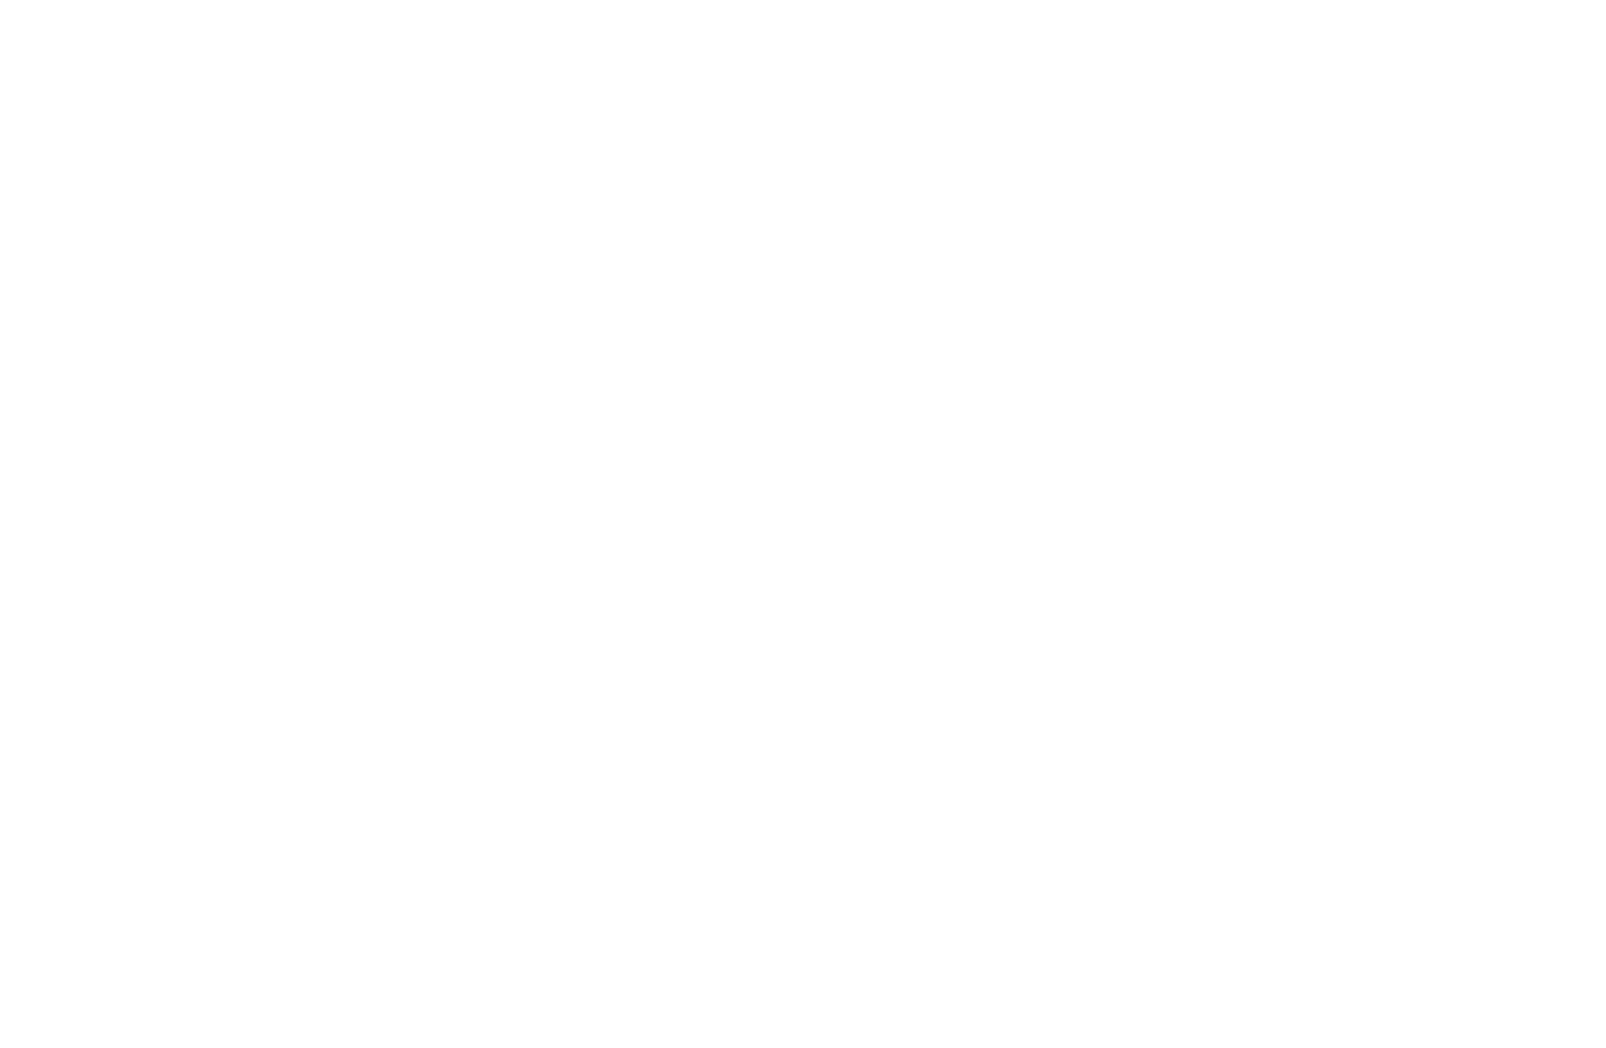 ContextLogic (wish.com) logo pour fonds sombres (PNG transparent)